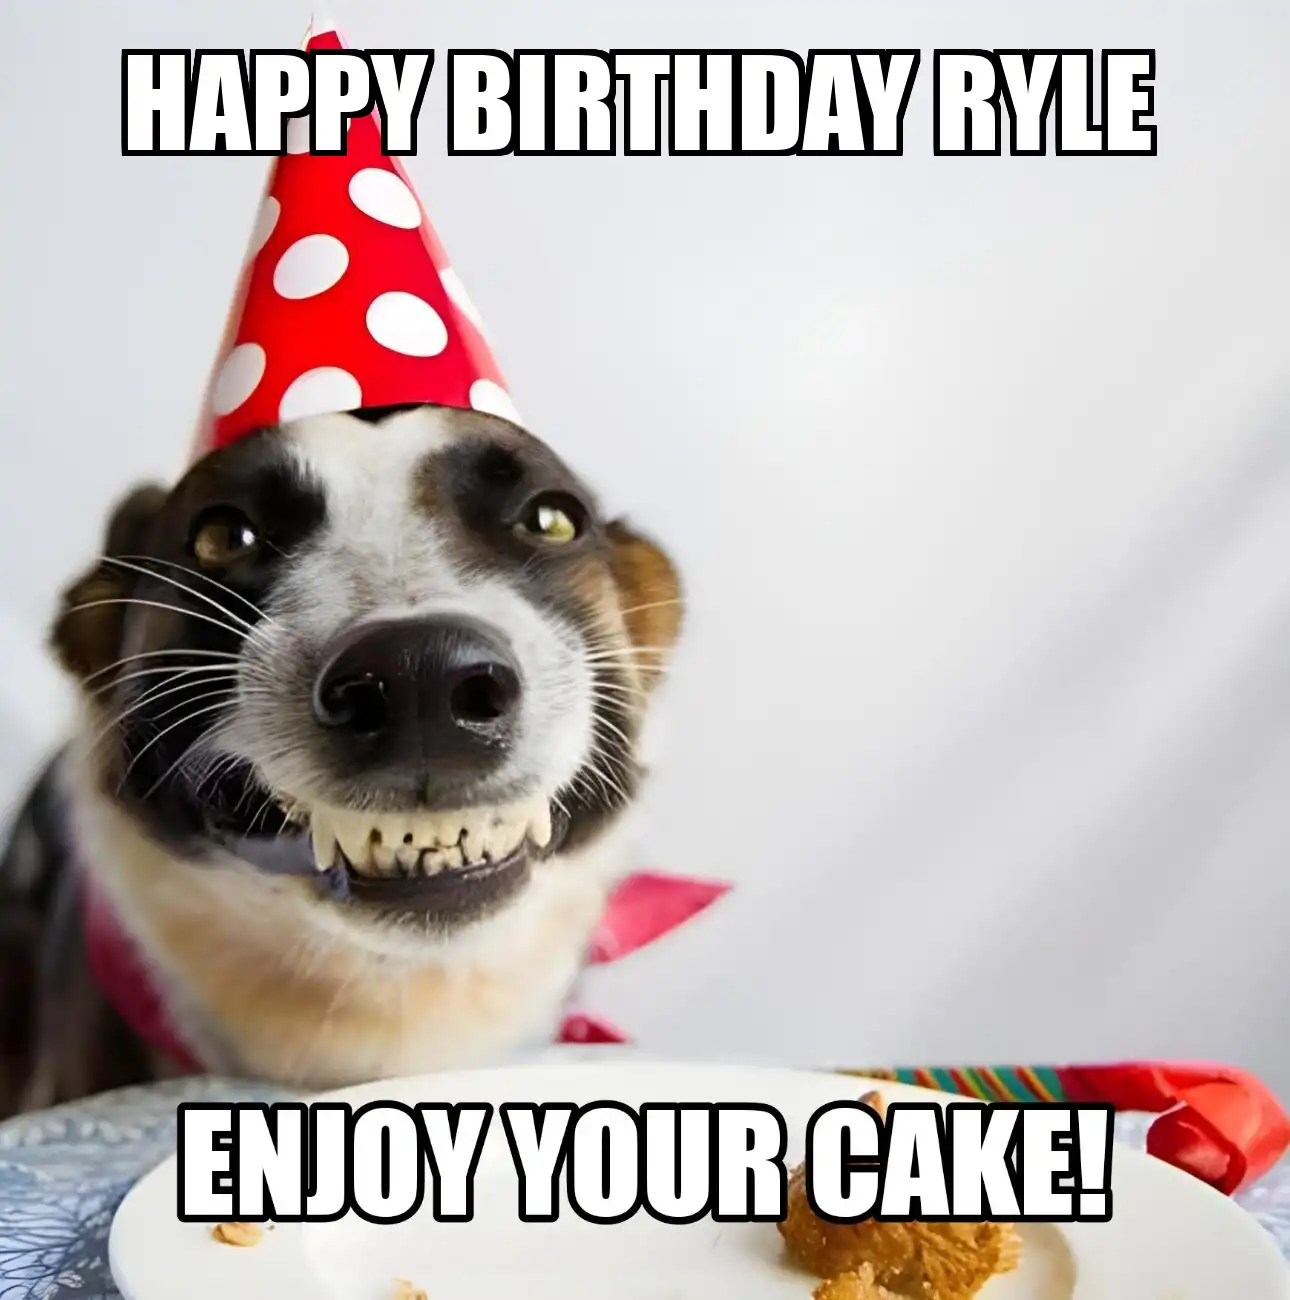 Happy Birthday Ryle Enjoy Your Cake Dog Meme